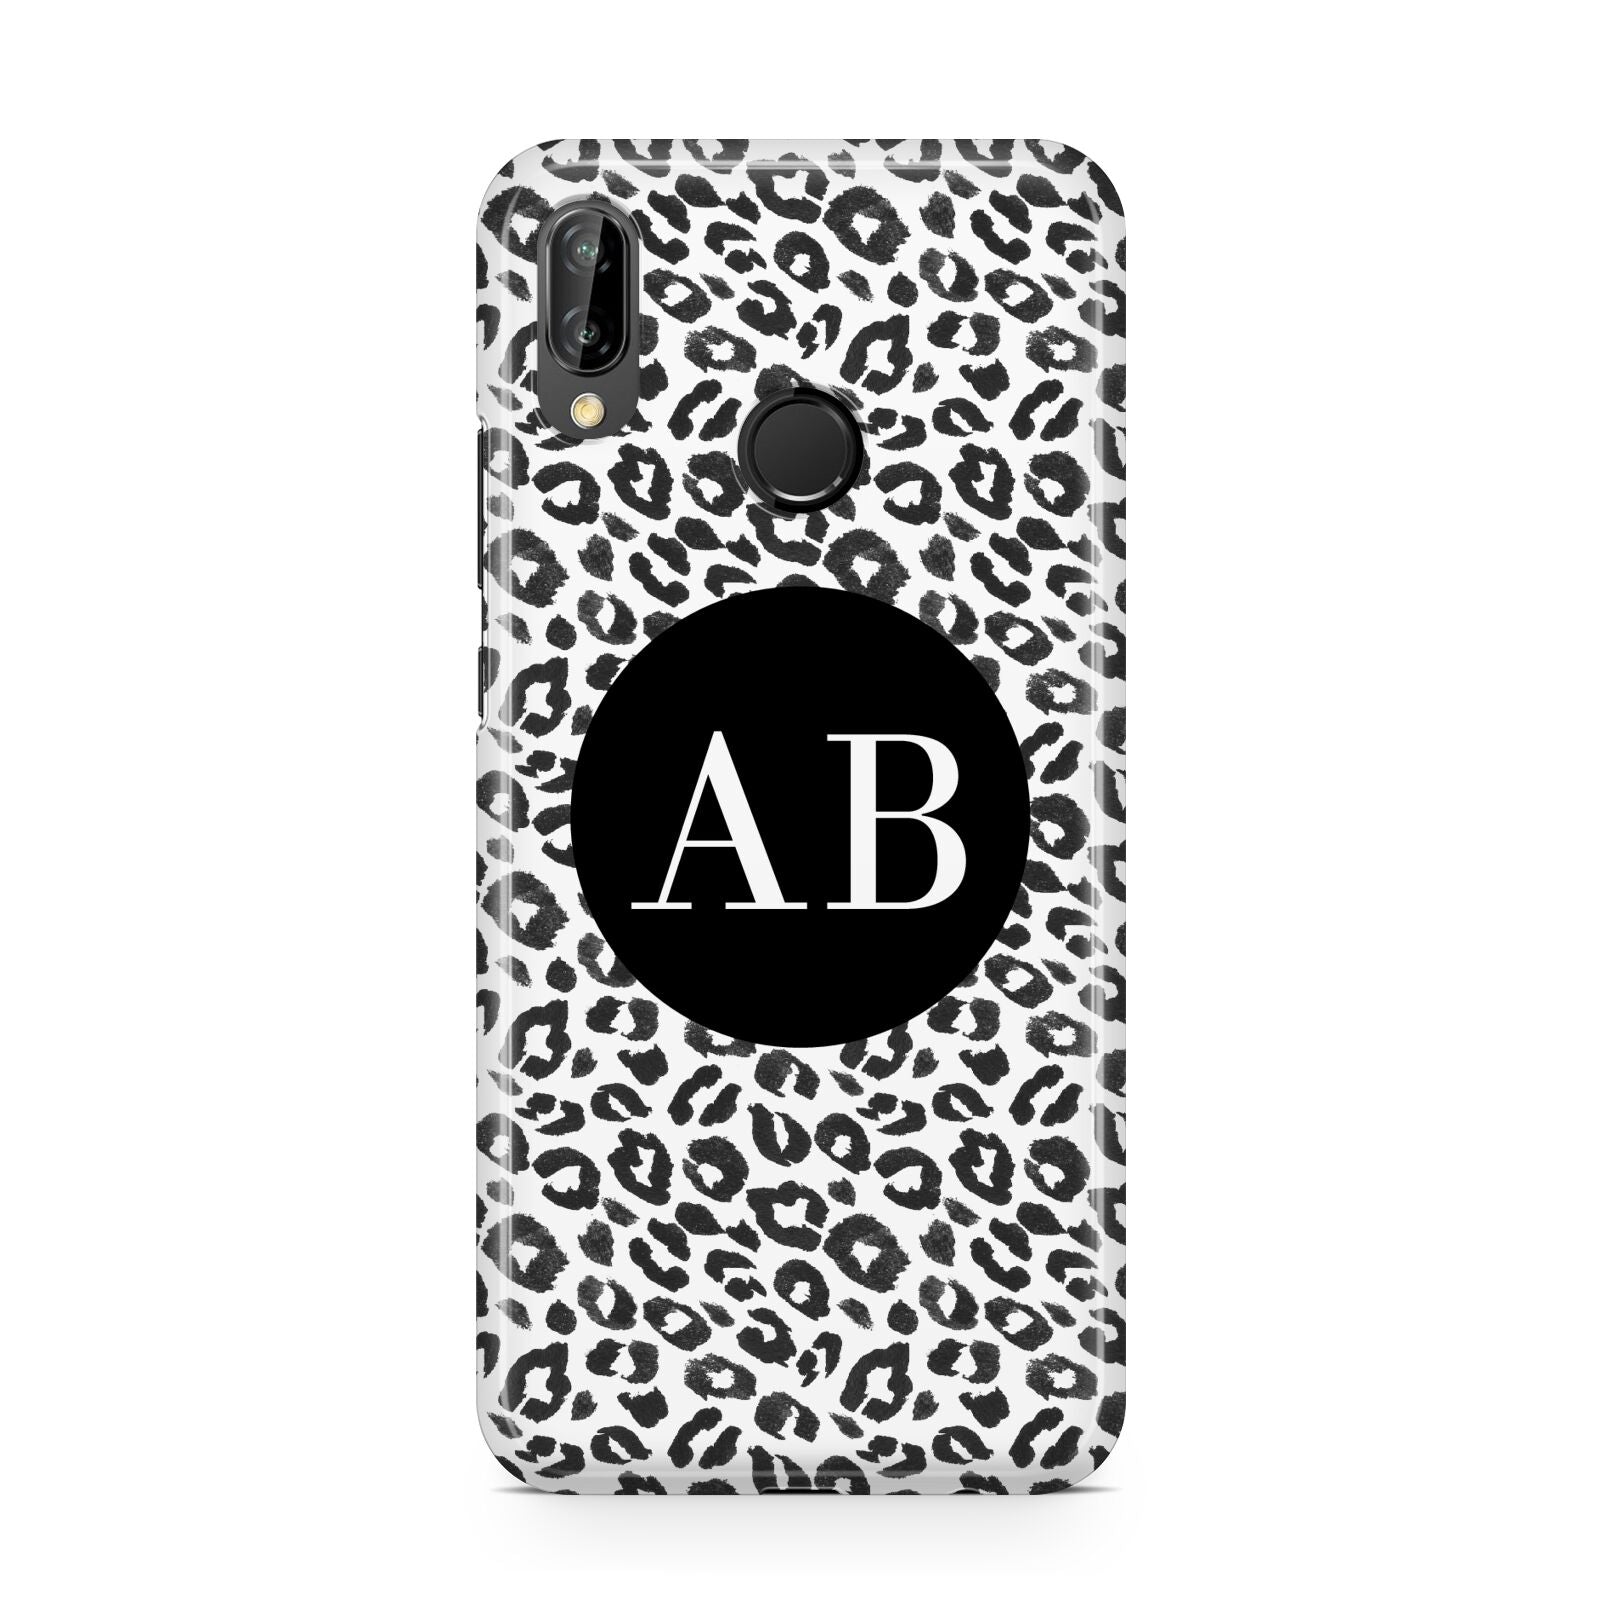 Leopard Print Black and White Huawei P20 Lite Phone Case